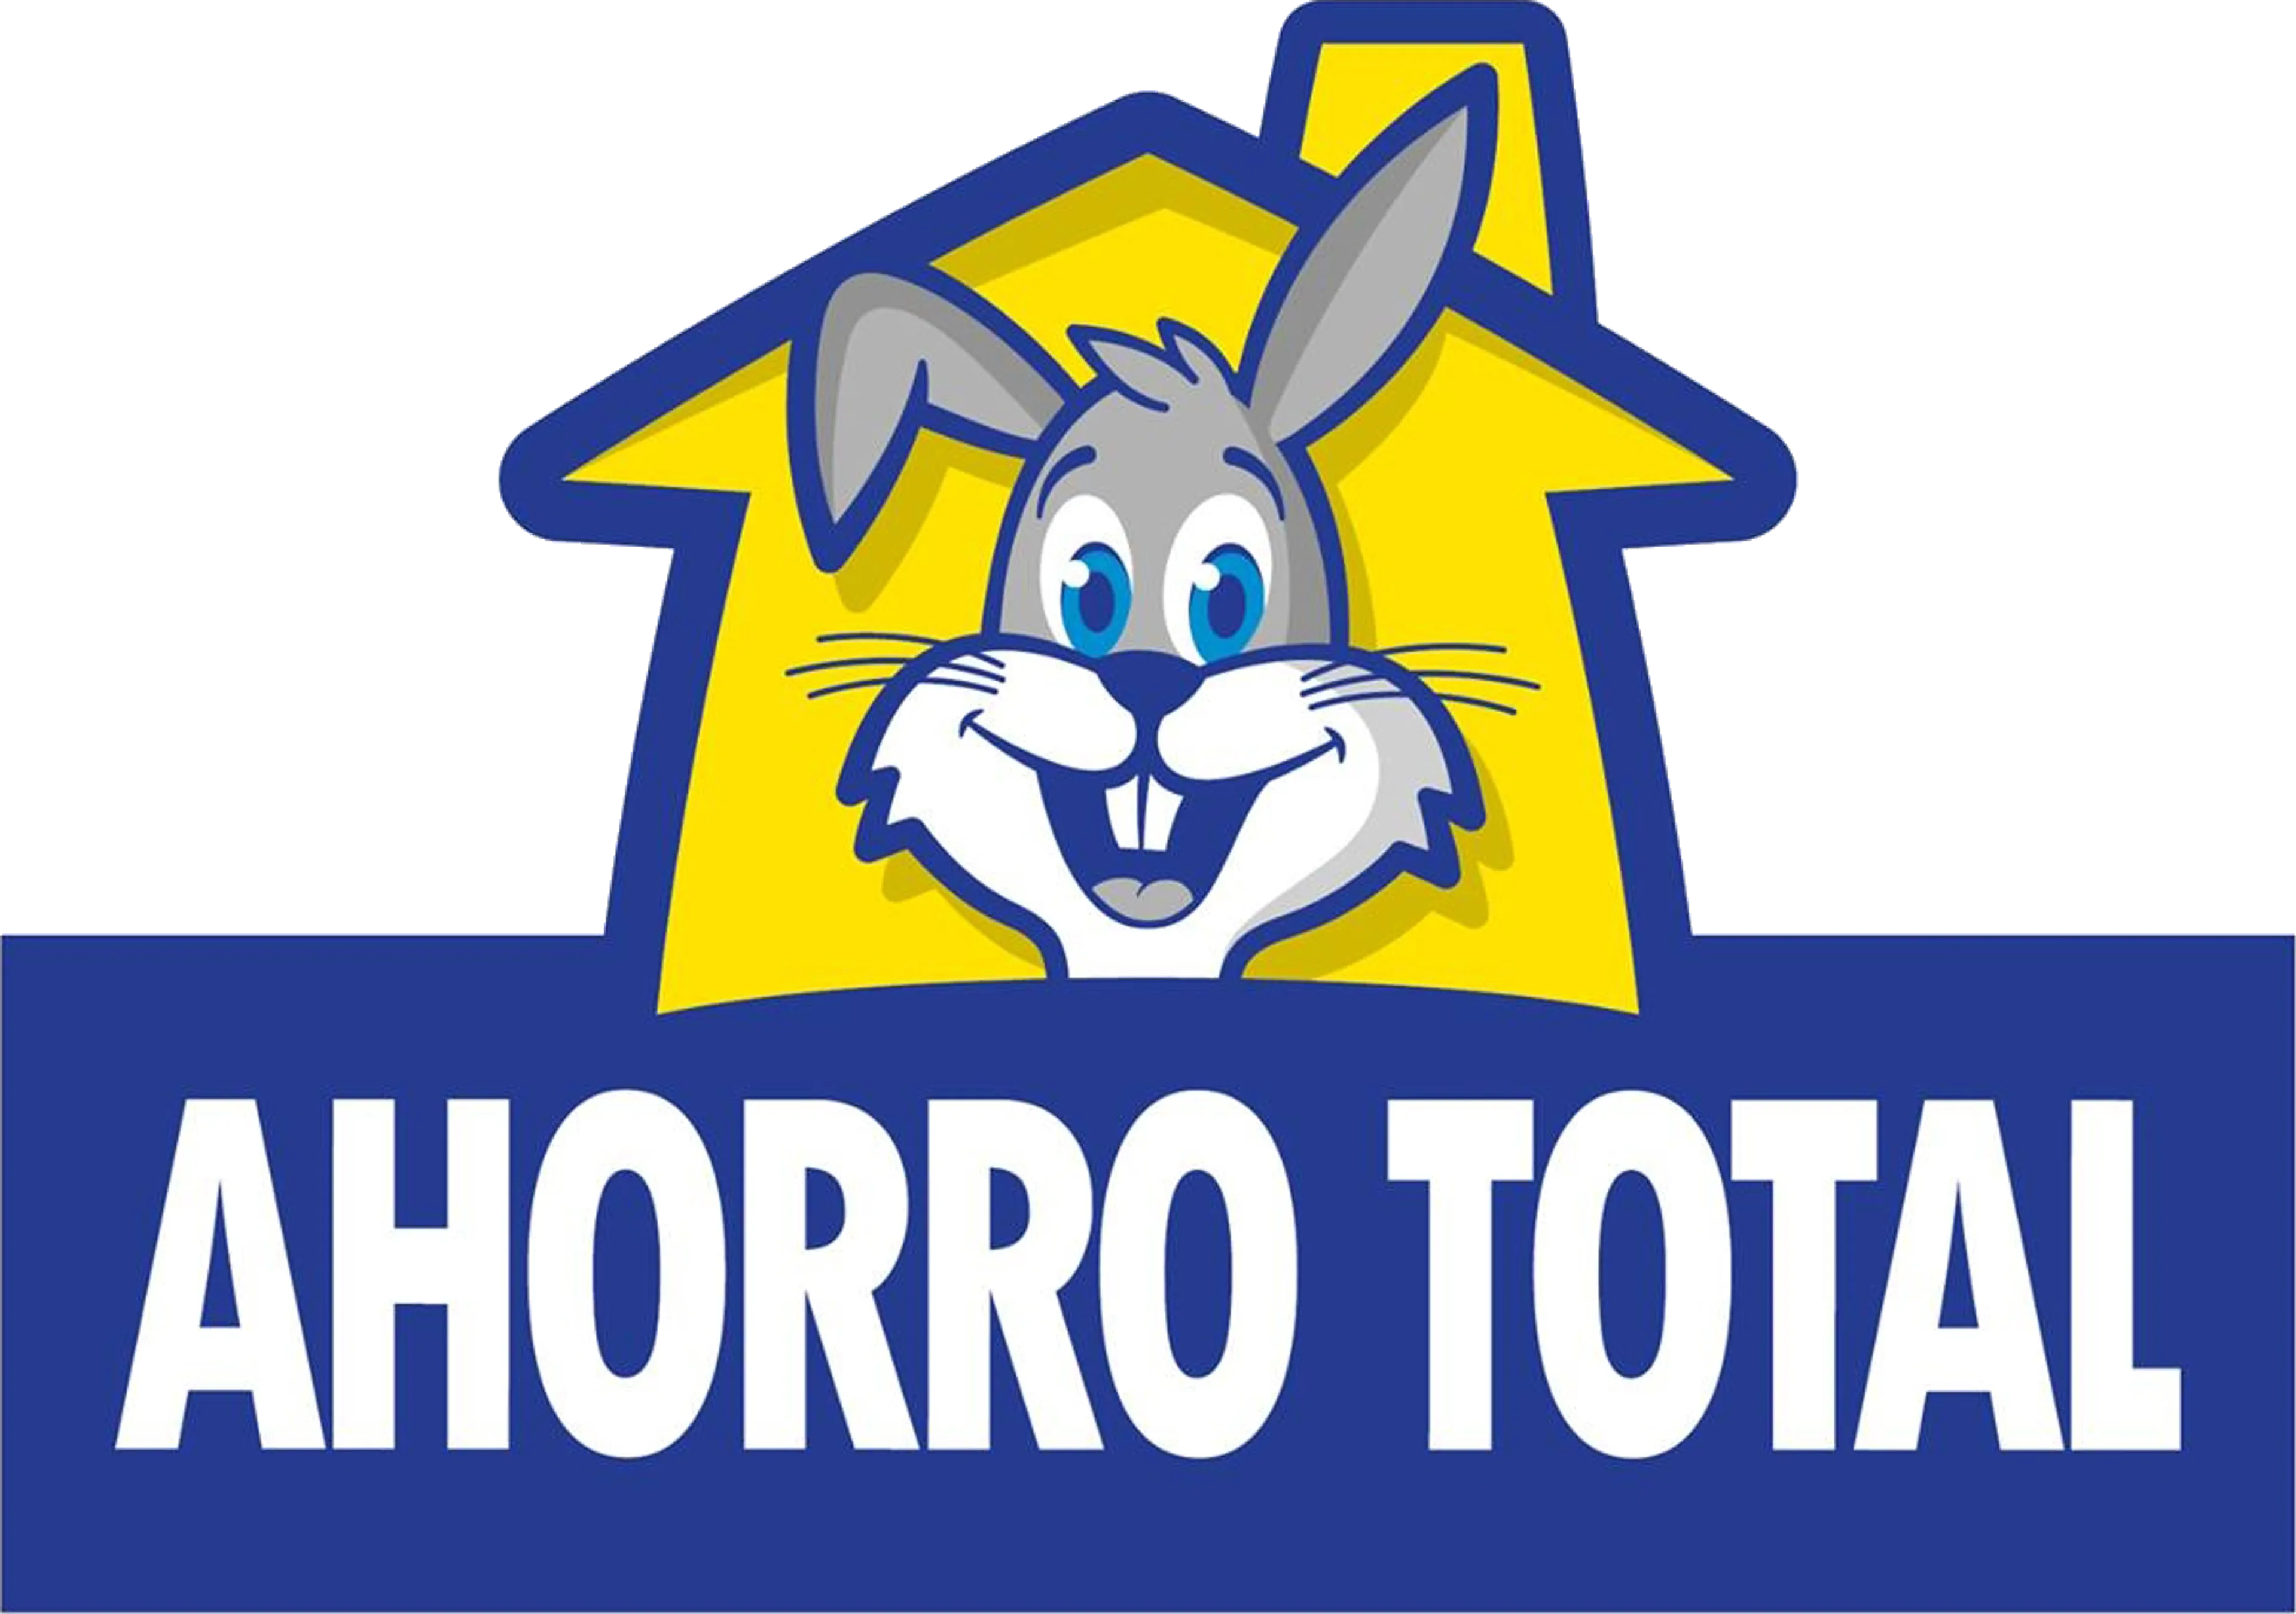 AHORRO TOTAL logo